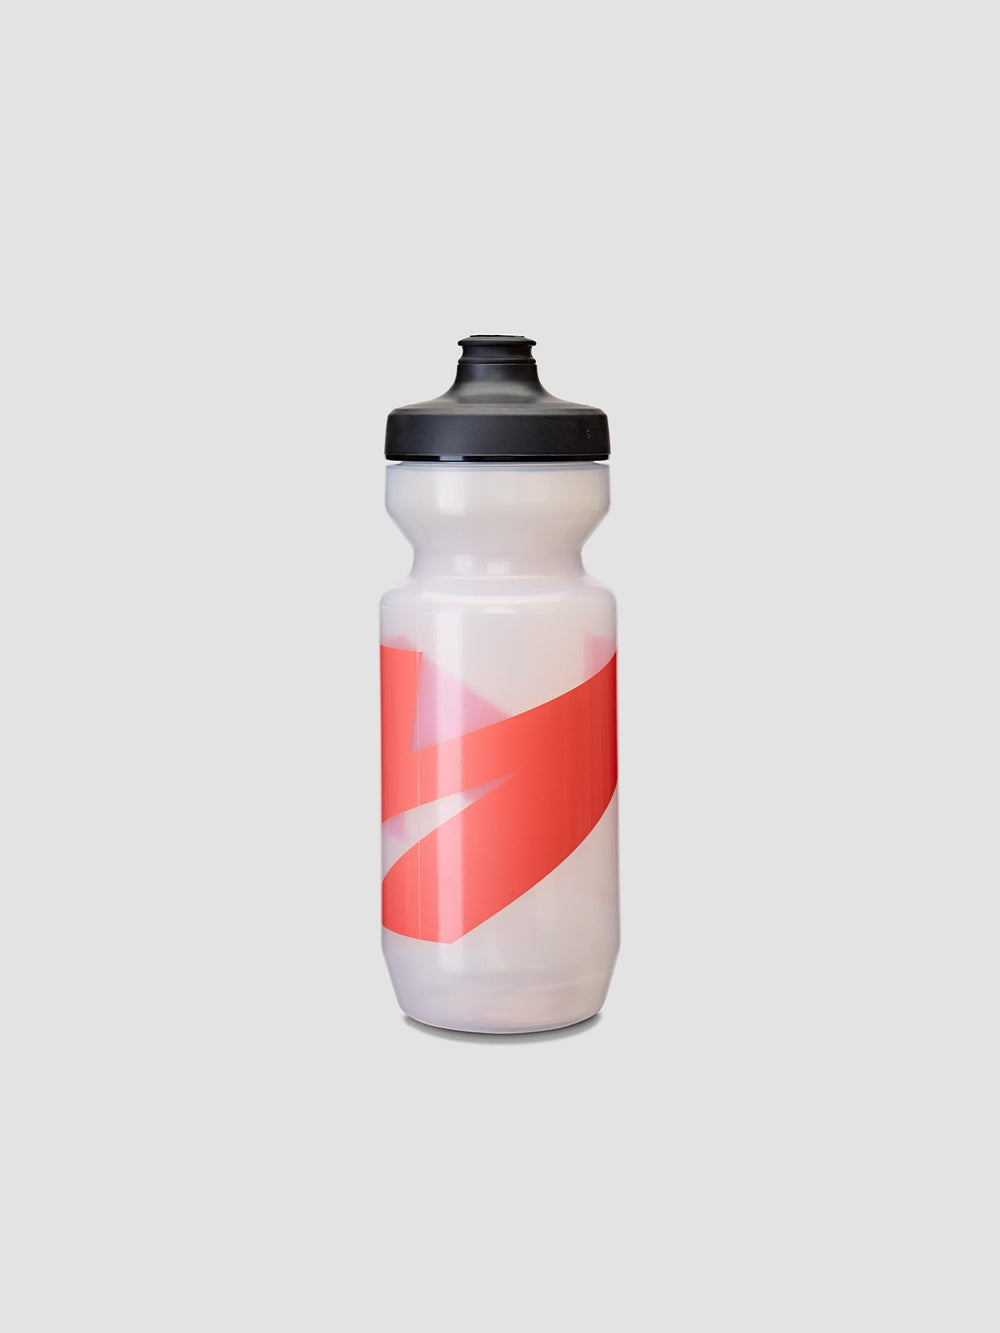 Product Image for Evolve Bottle